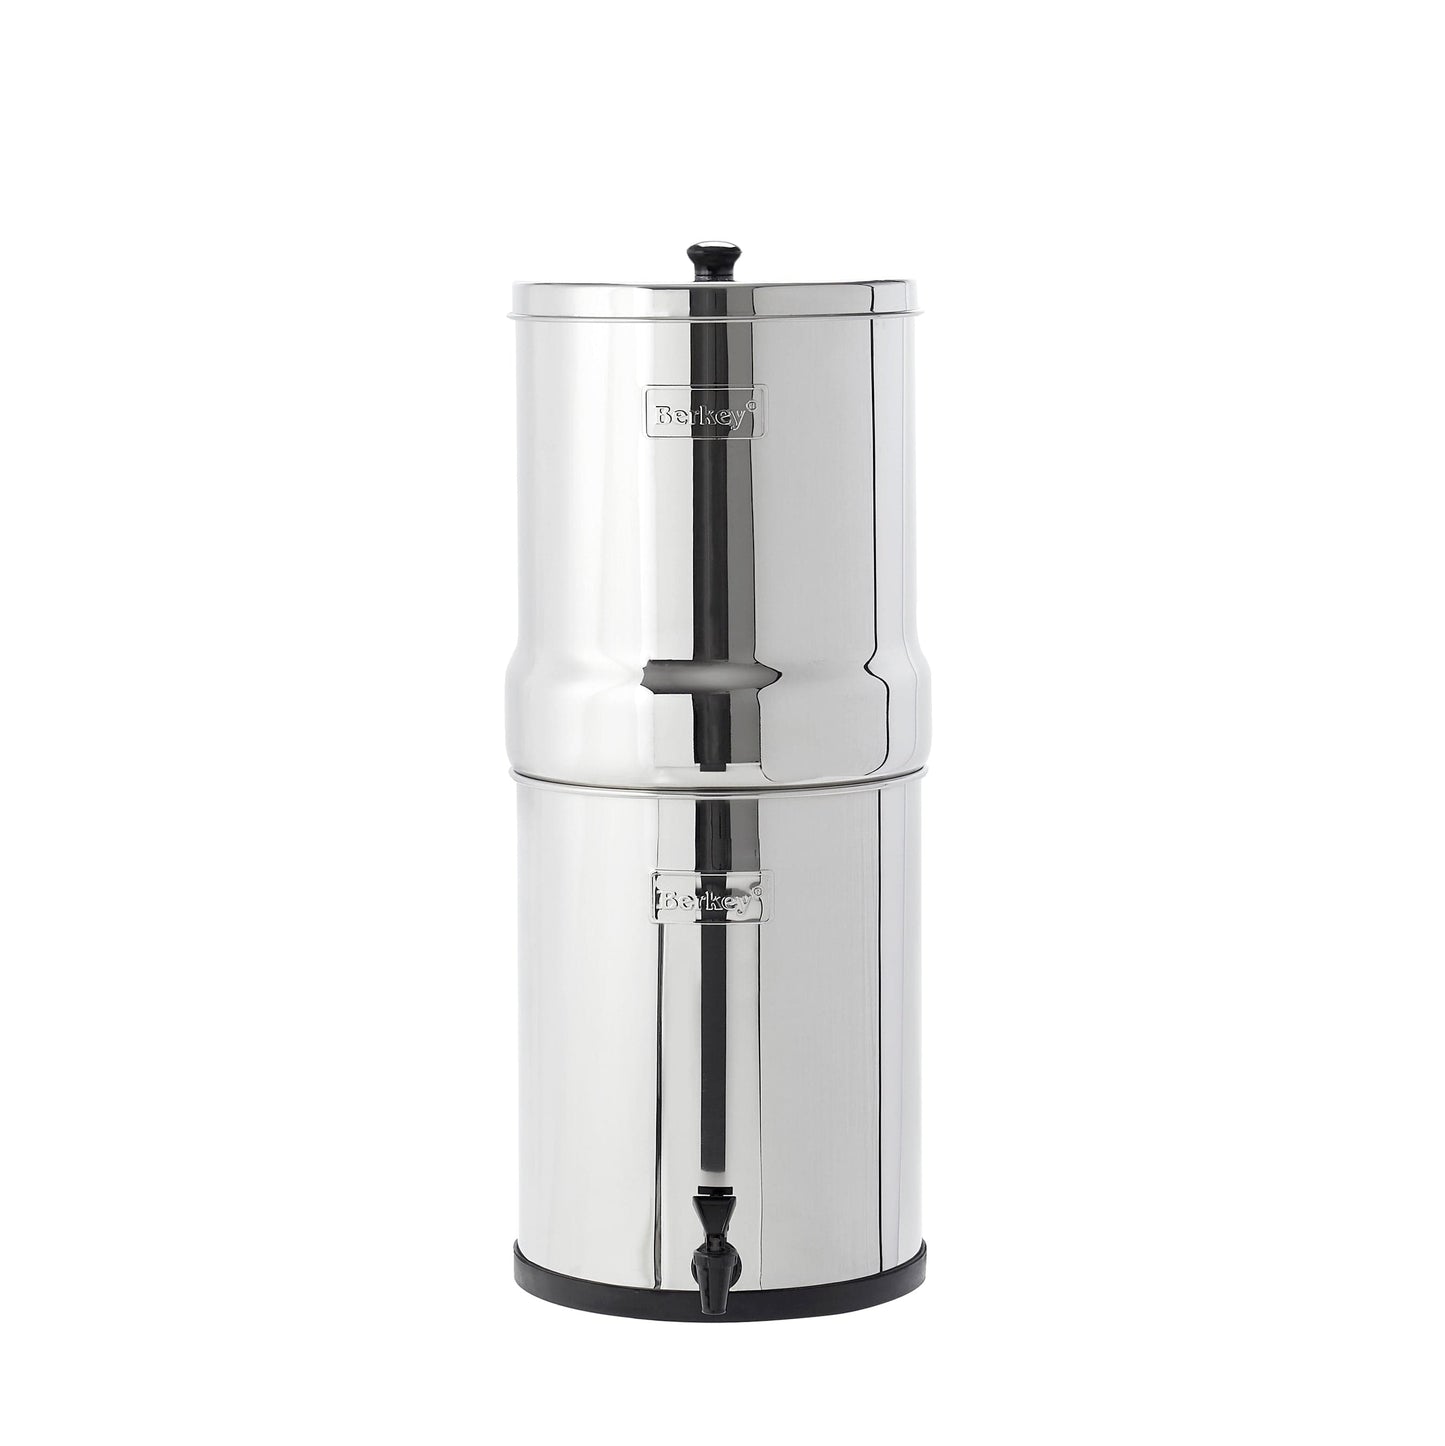 Fontaine Filtrante Royal Berkey® 12.3 litres - 2 filtres Black